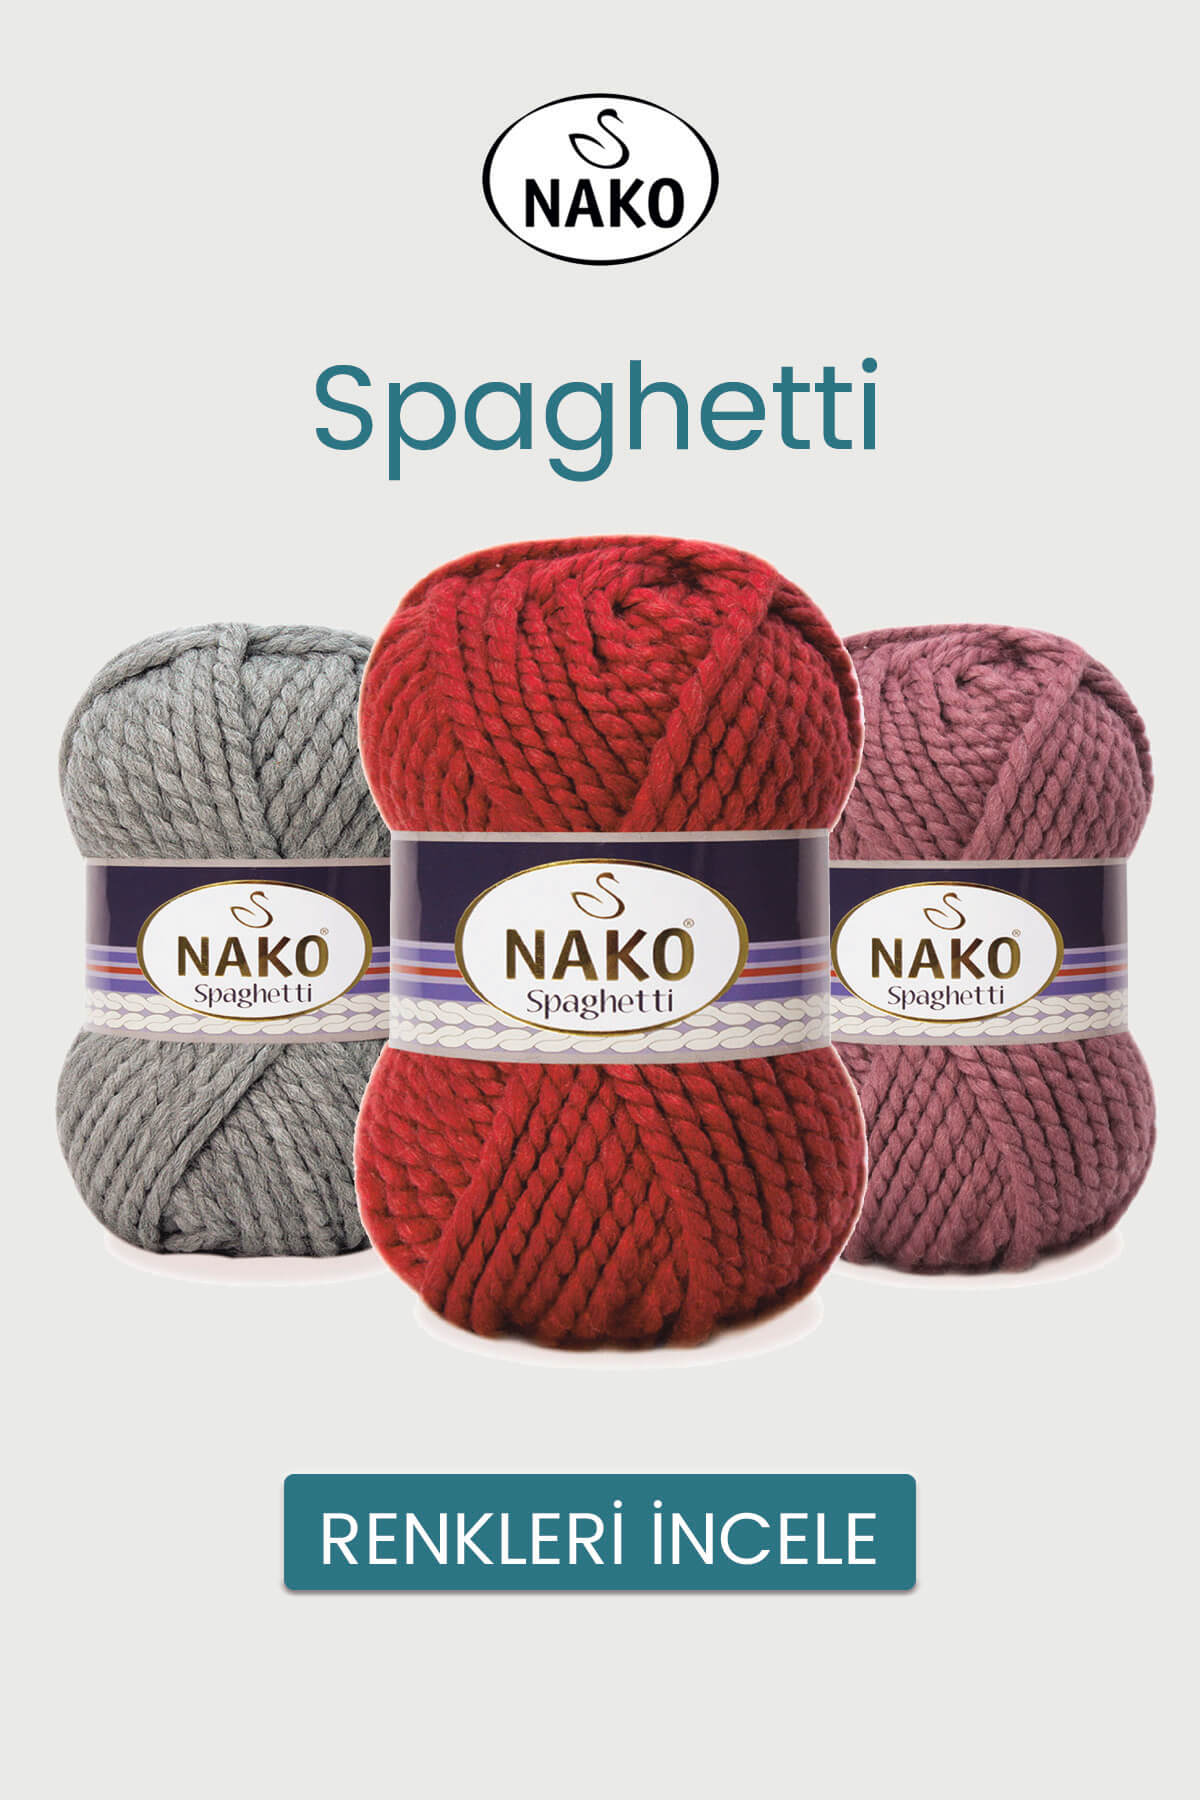 nako-spaghetti-tekstilland